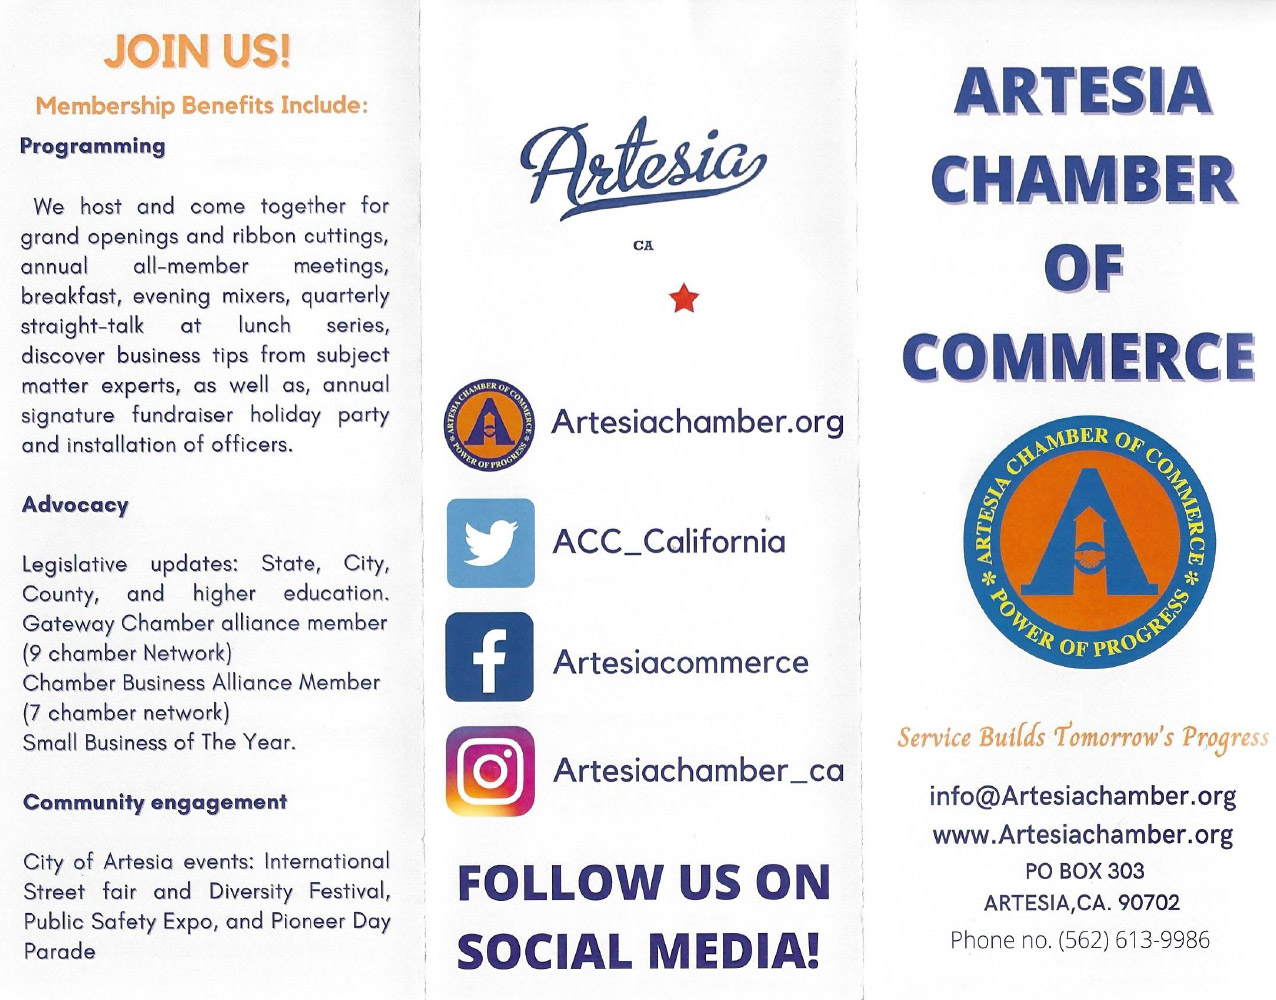 Artesia Chamber of Commerce Brochure